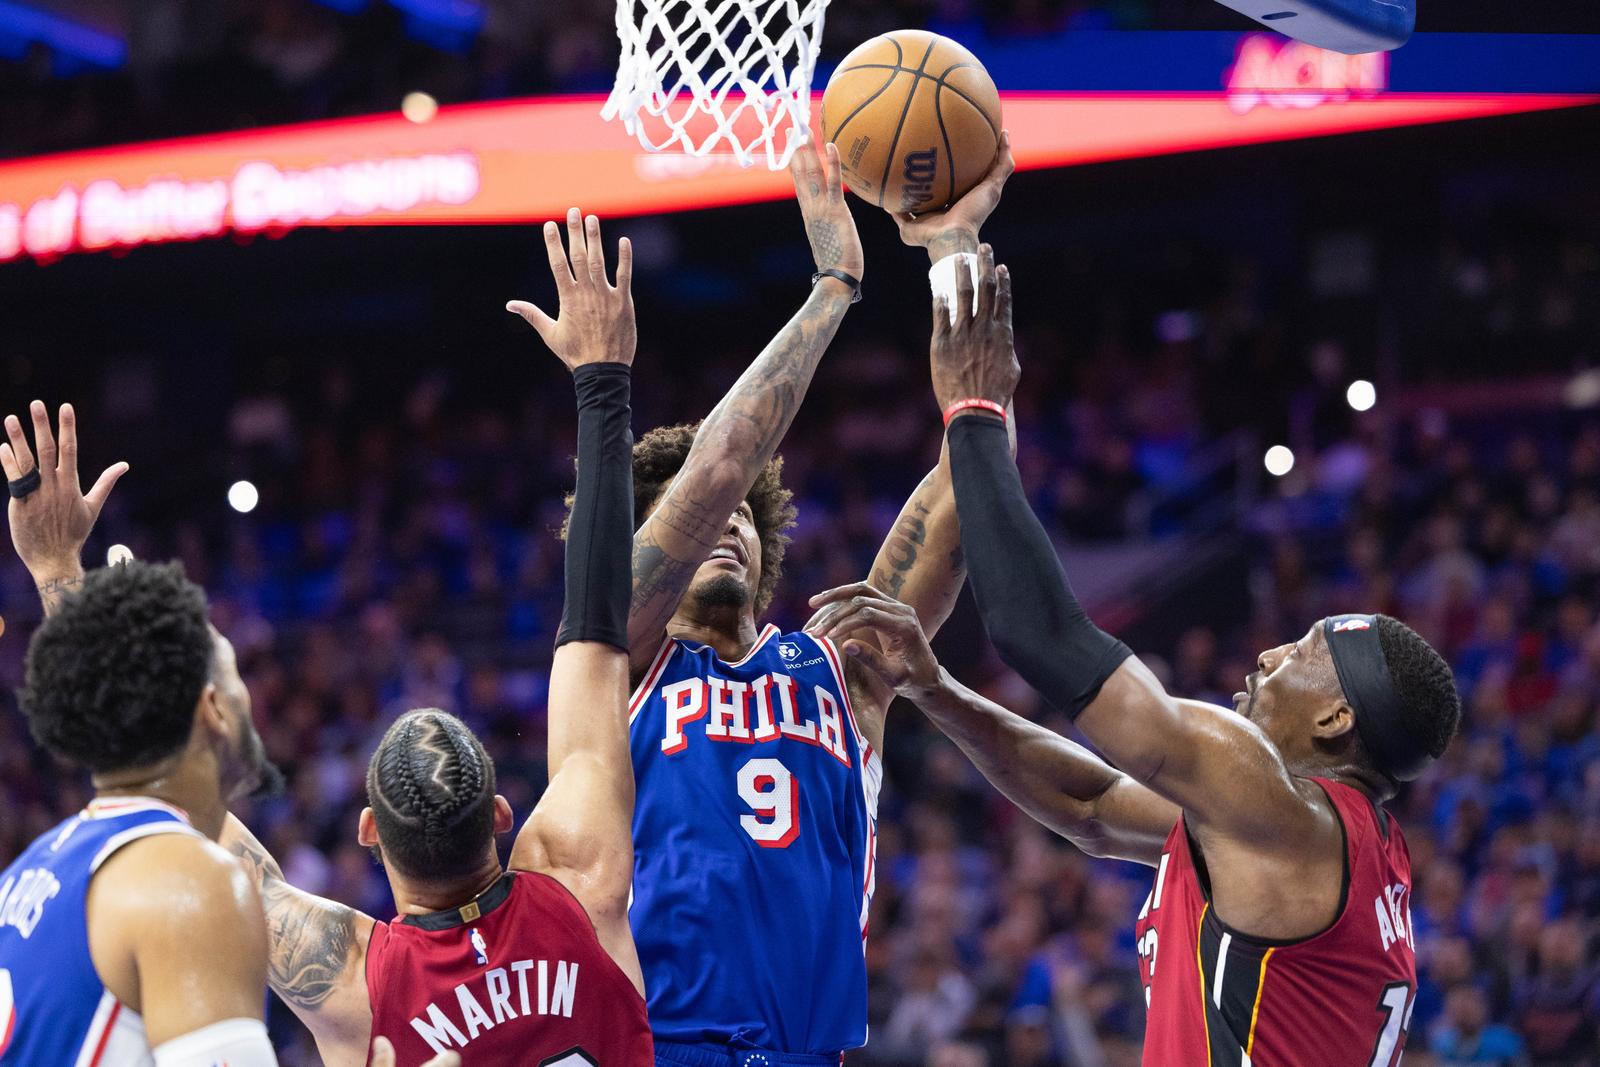 Philadelphia 76ersi savladali Miami Heat i plasirali se u play-off